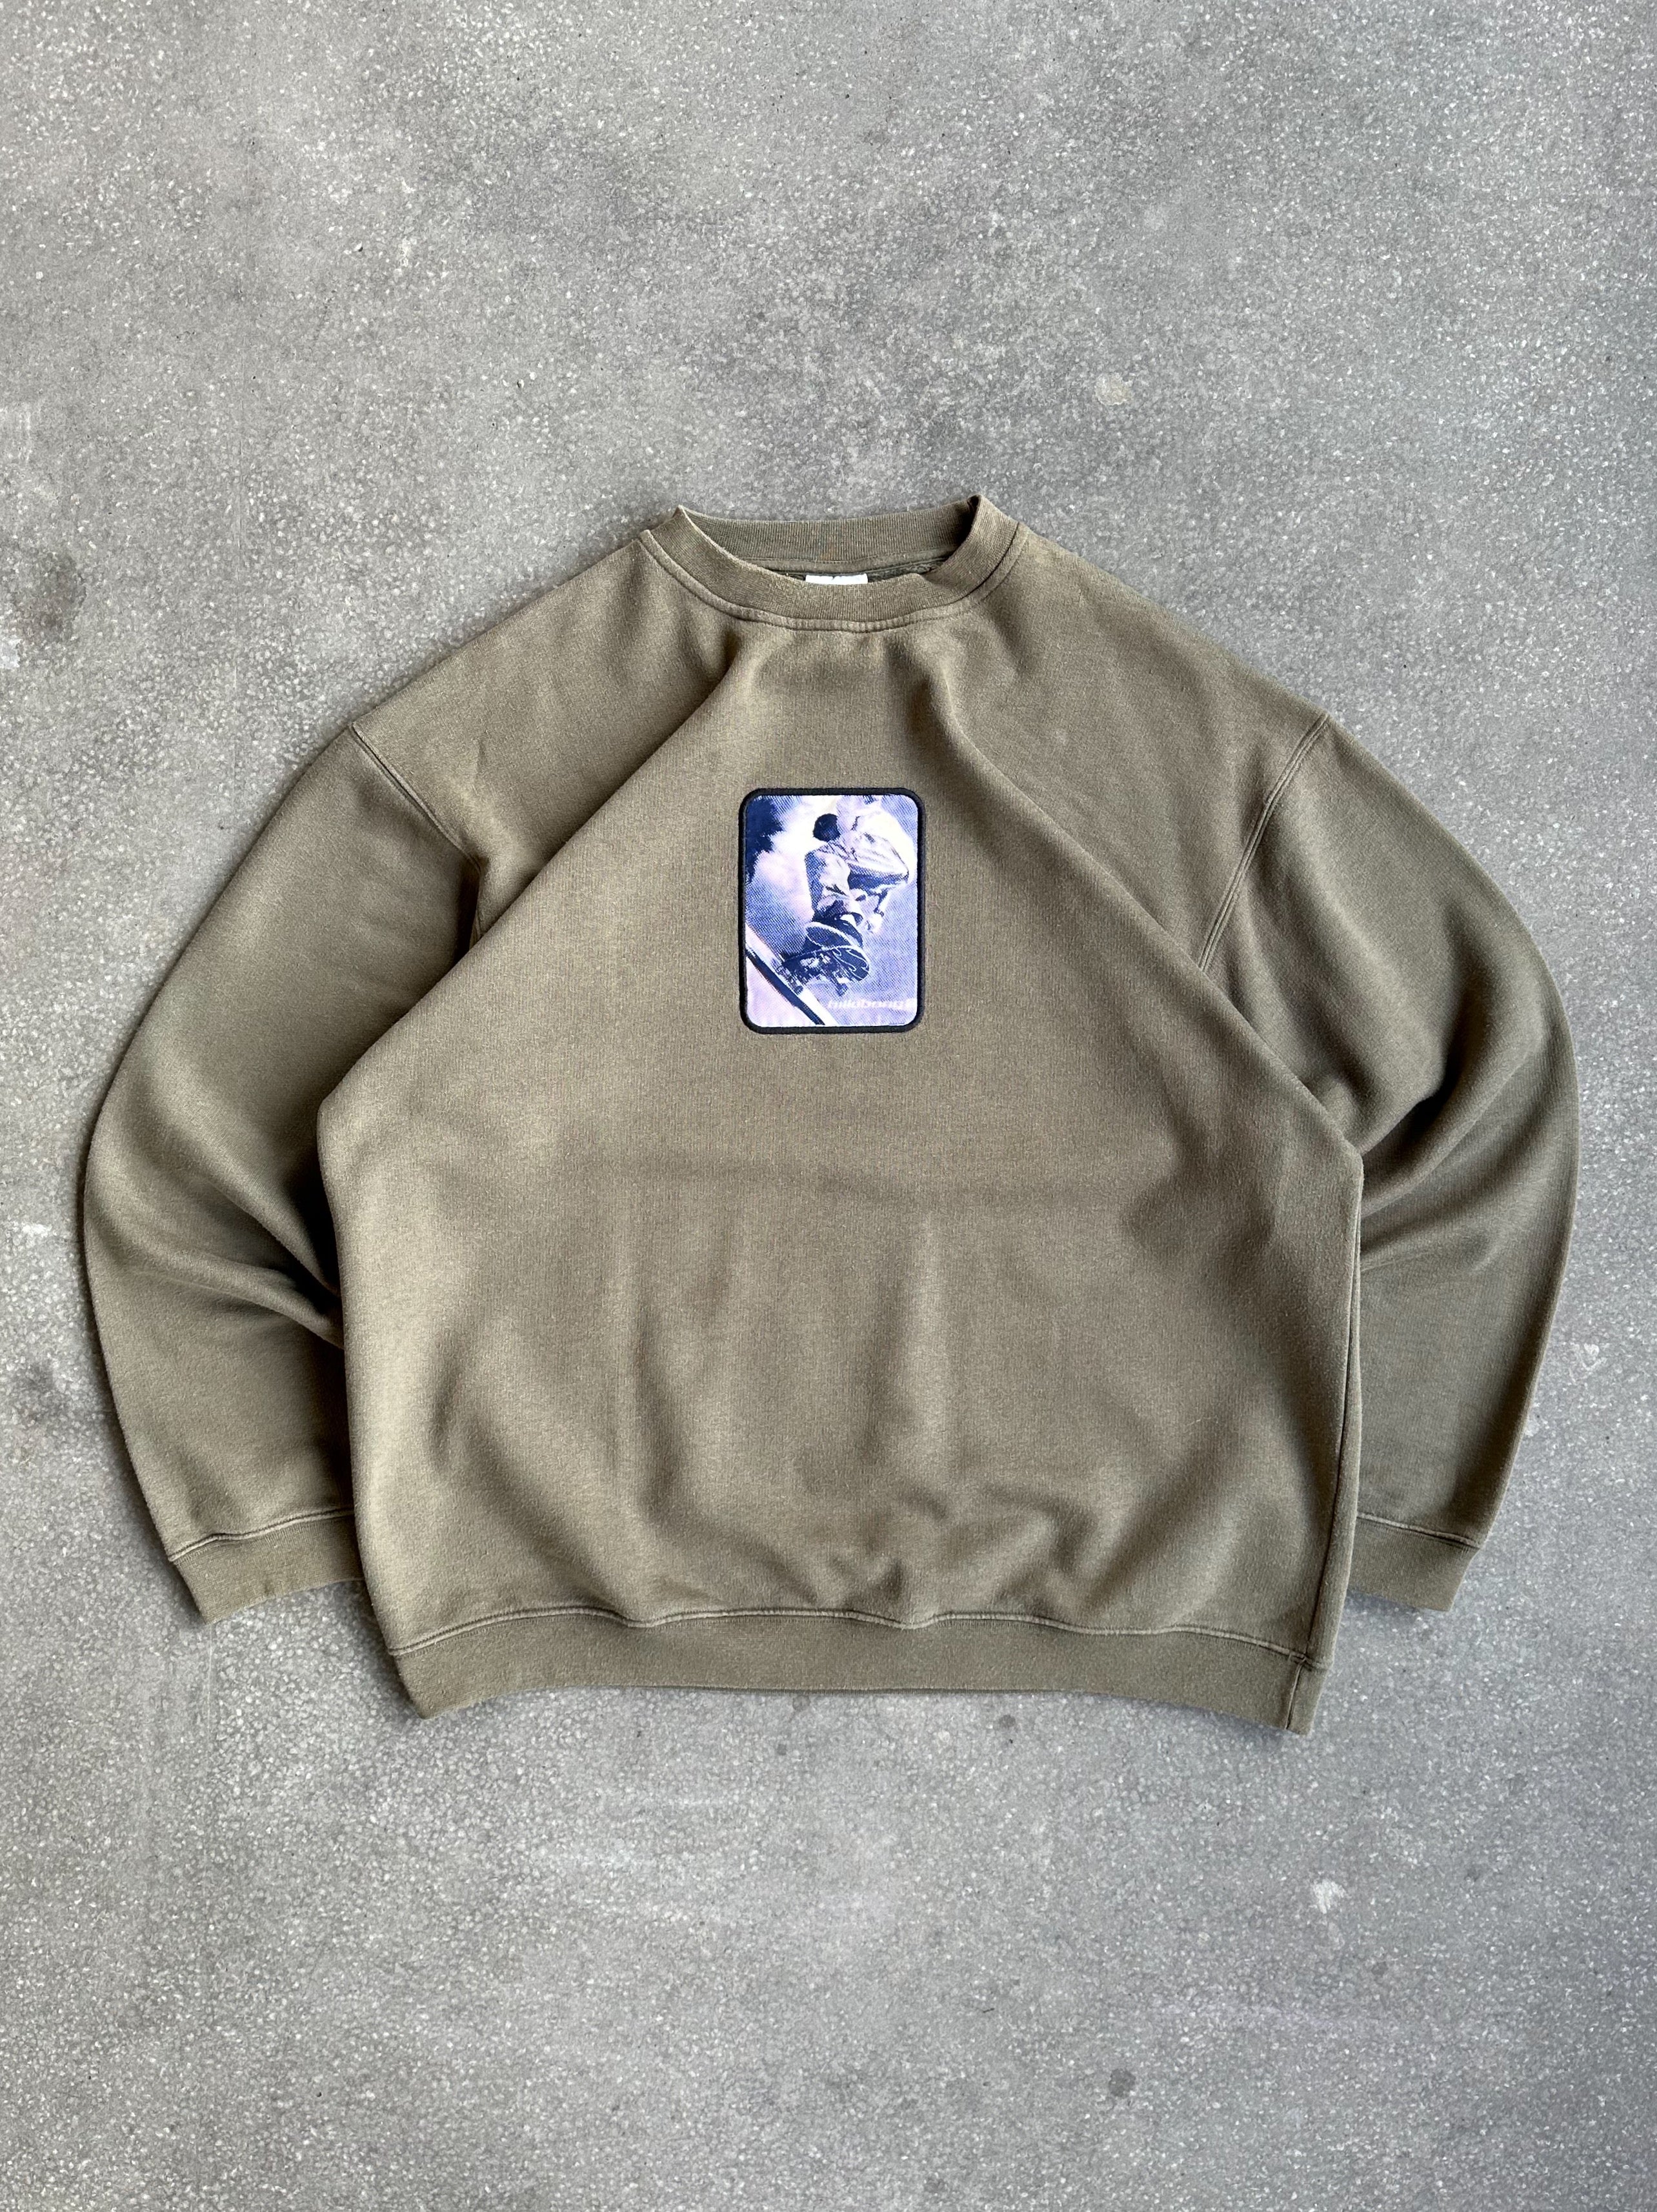 Vintage Billabong Crewneck Sweater - Extra Large